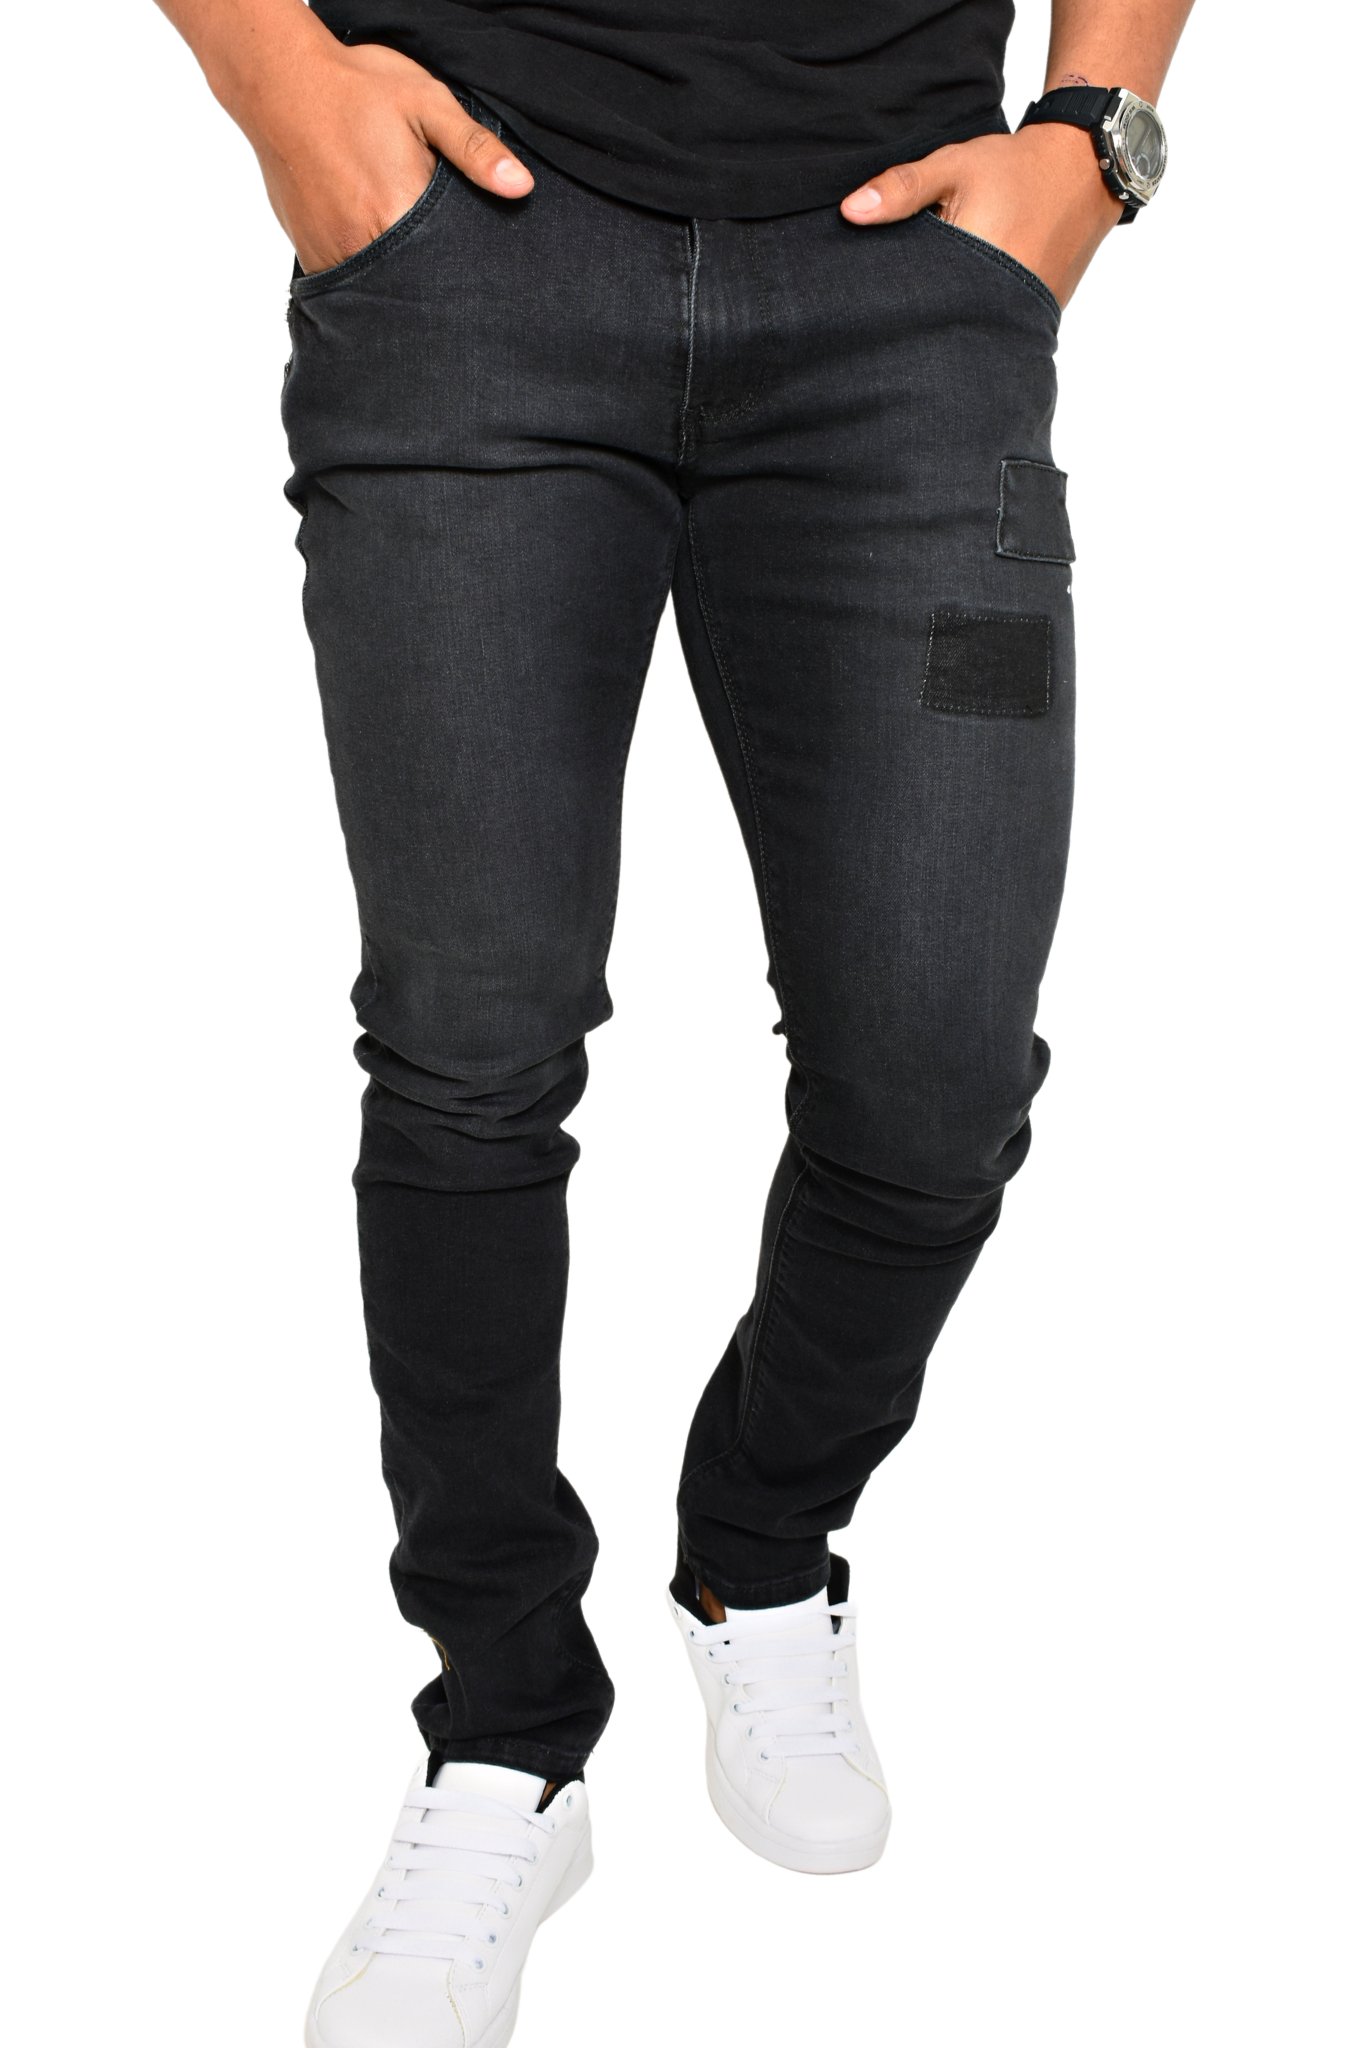 Pantalón de Mezclilla Negro Detalle Parche GS